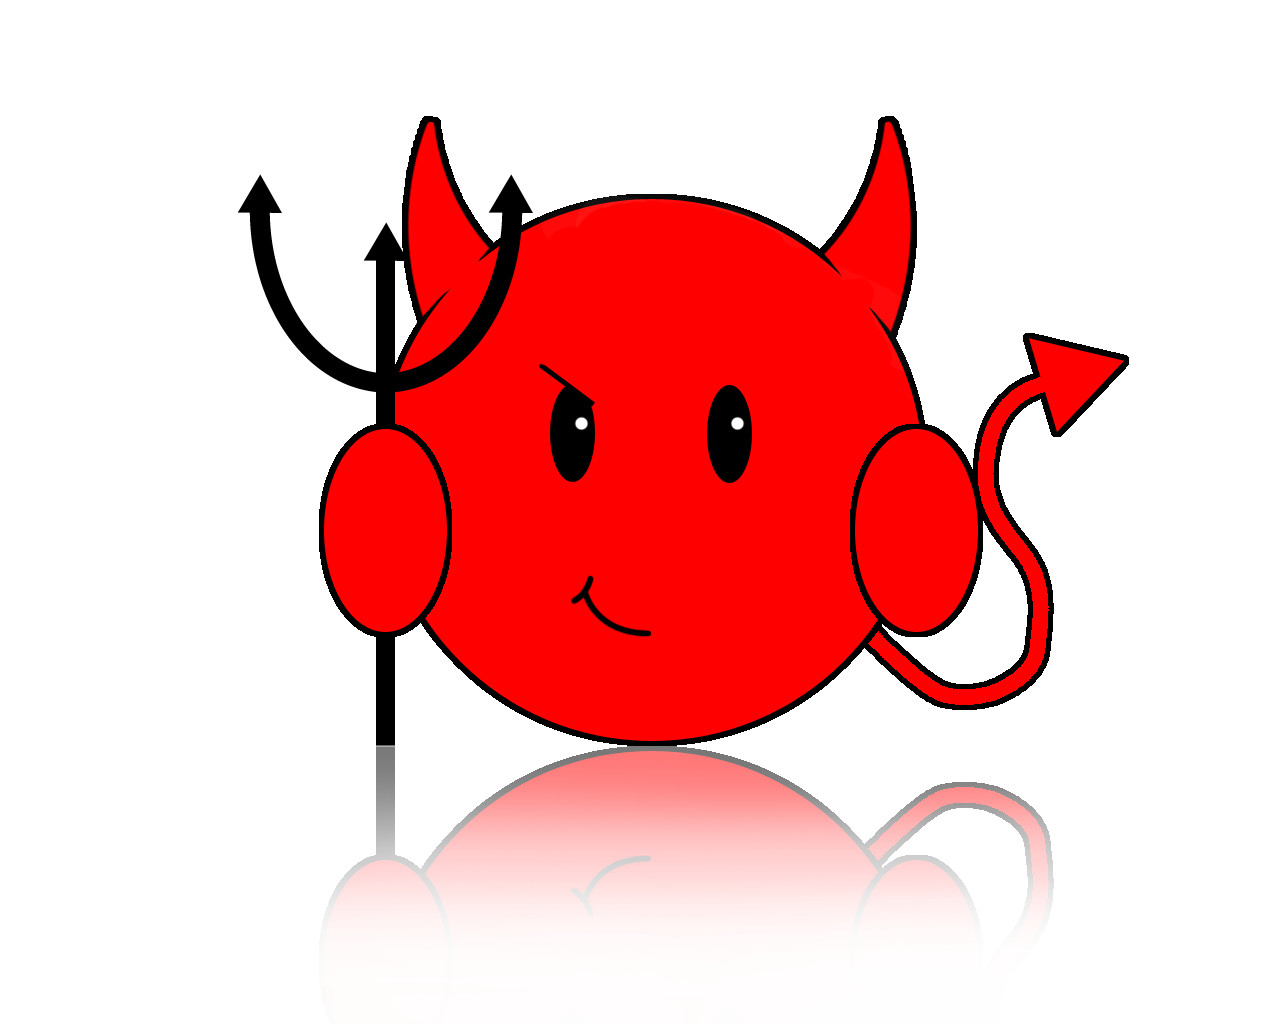 Free Cartoon Devils, Download Free Cartoon Devils png images, Free ...